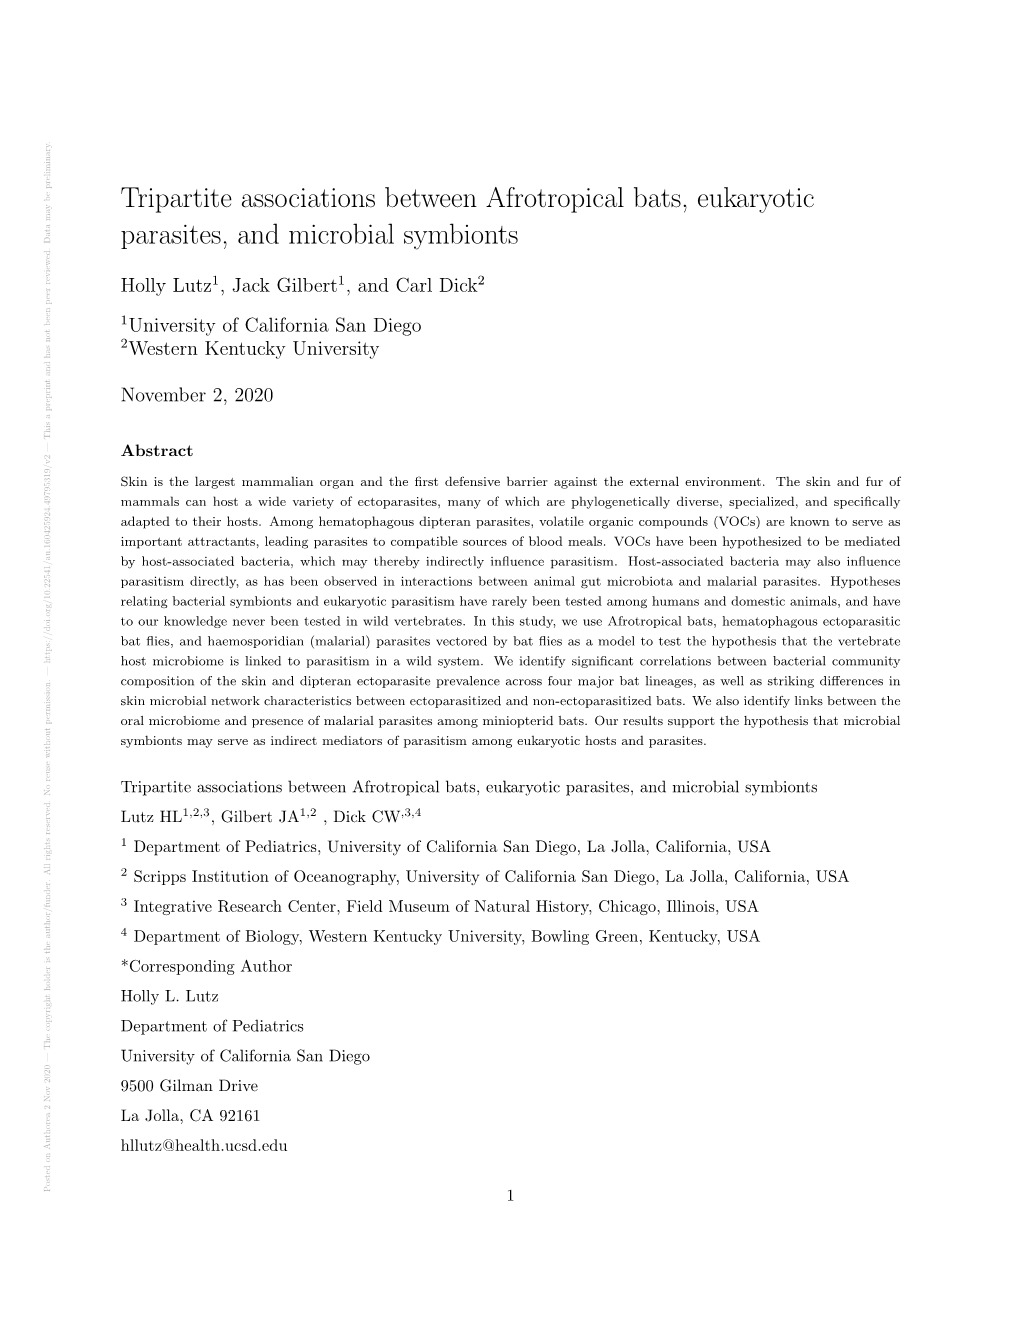 Tripartite Associations Between Afrotropical Bats, Eukaryotic Parasites, and Microbial Symbionts